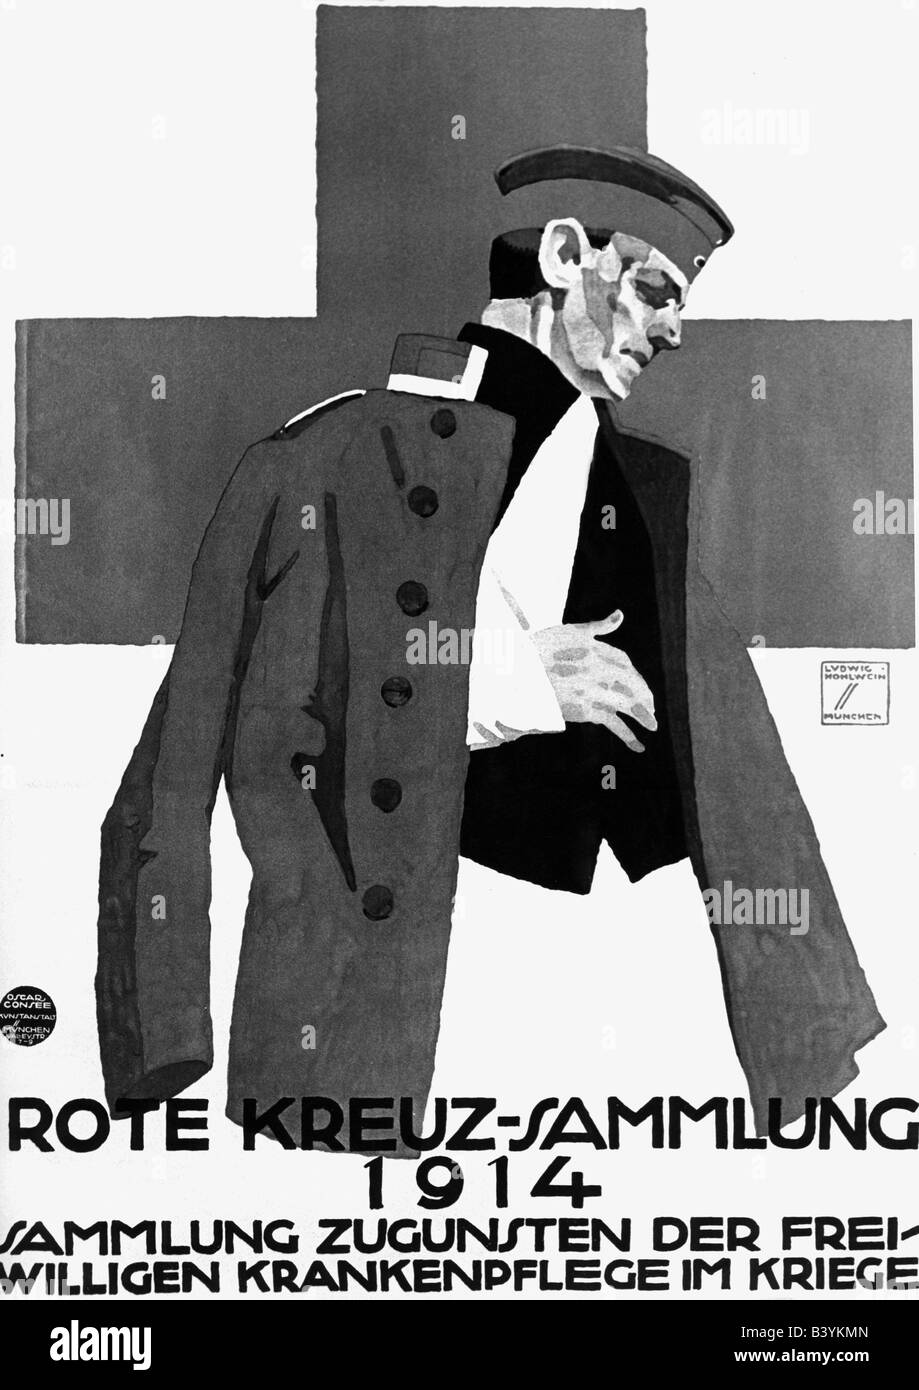 events, First World War / WWI, propaganda, poster 'Rote Kreuz-Sammlung 1914' (Red Cross collection 1914), Munich, Germany, 1914, Stock Photo